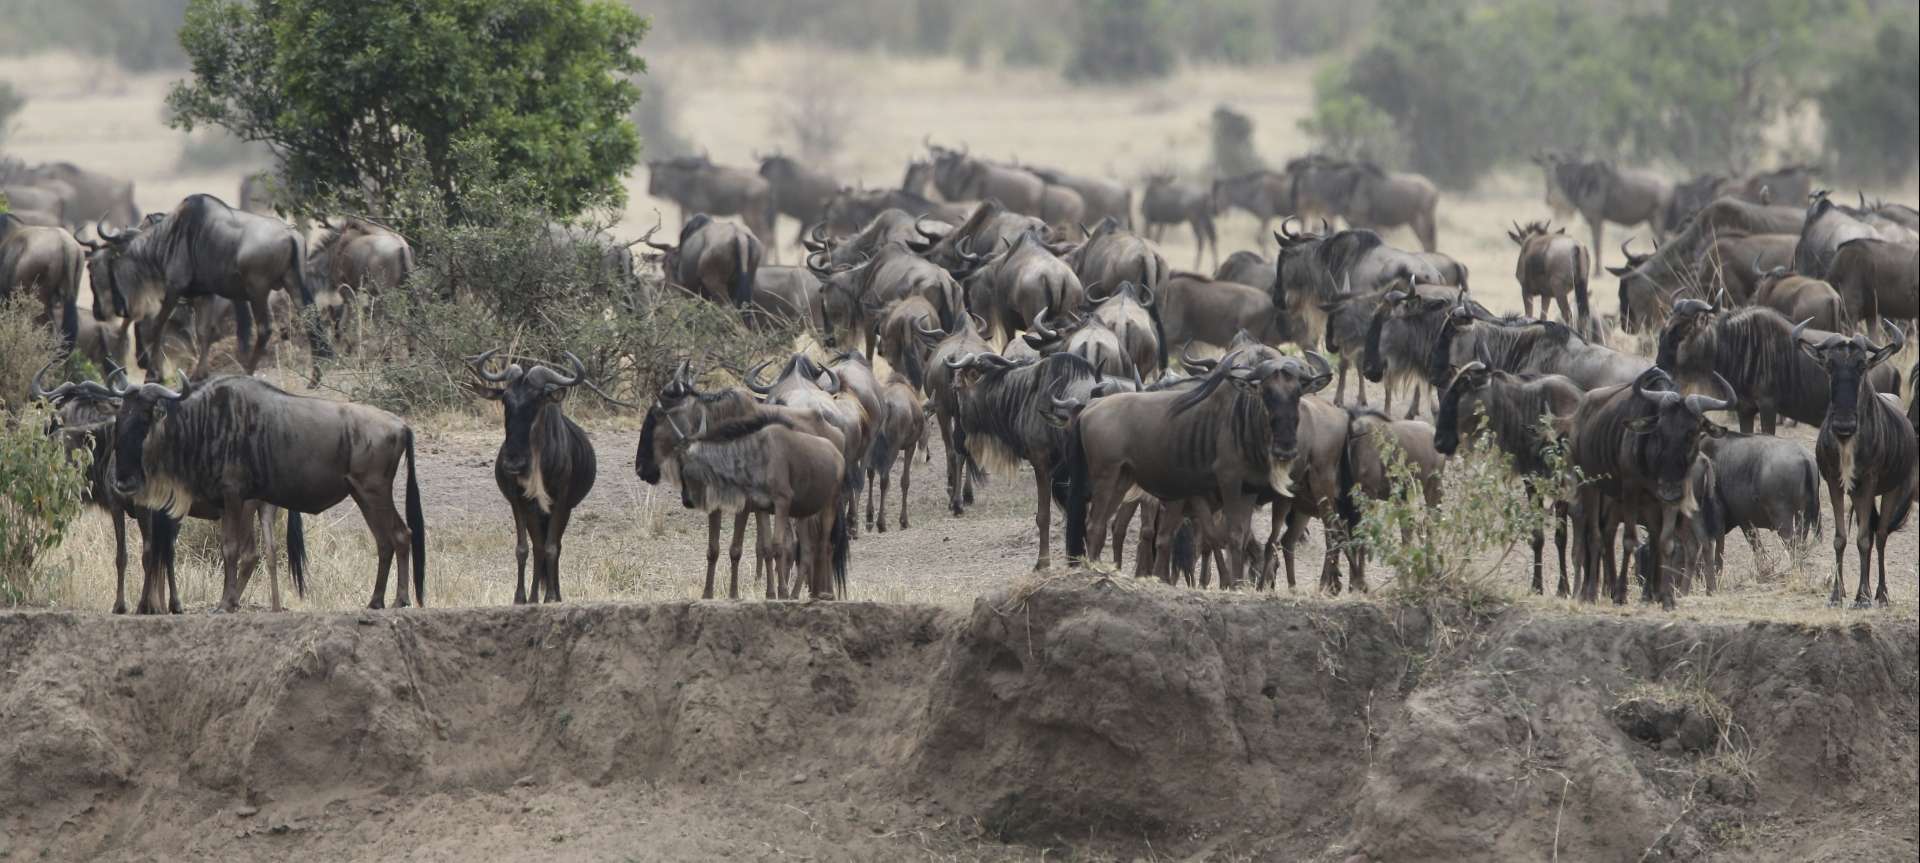 Migration_Kenya_Masai Mara